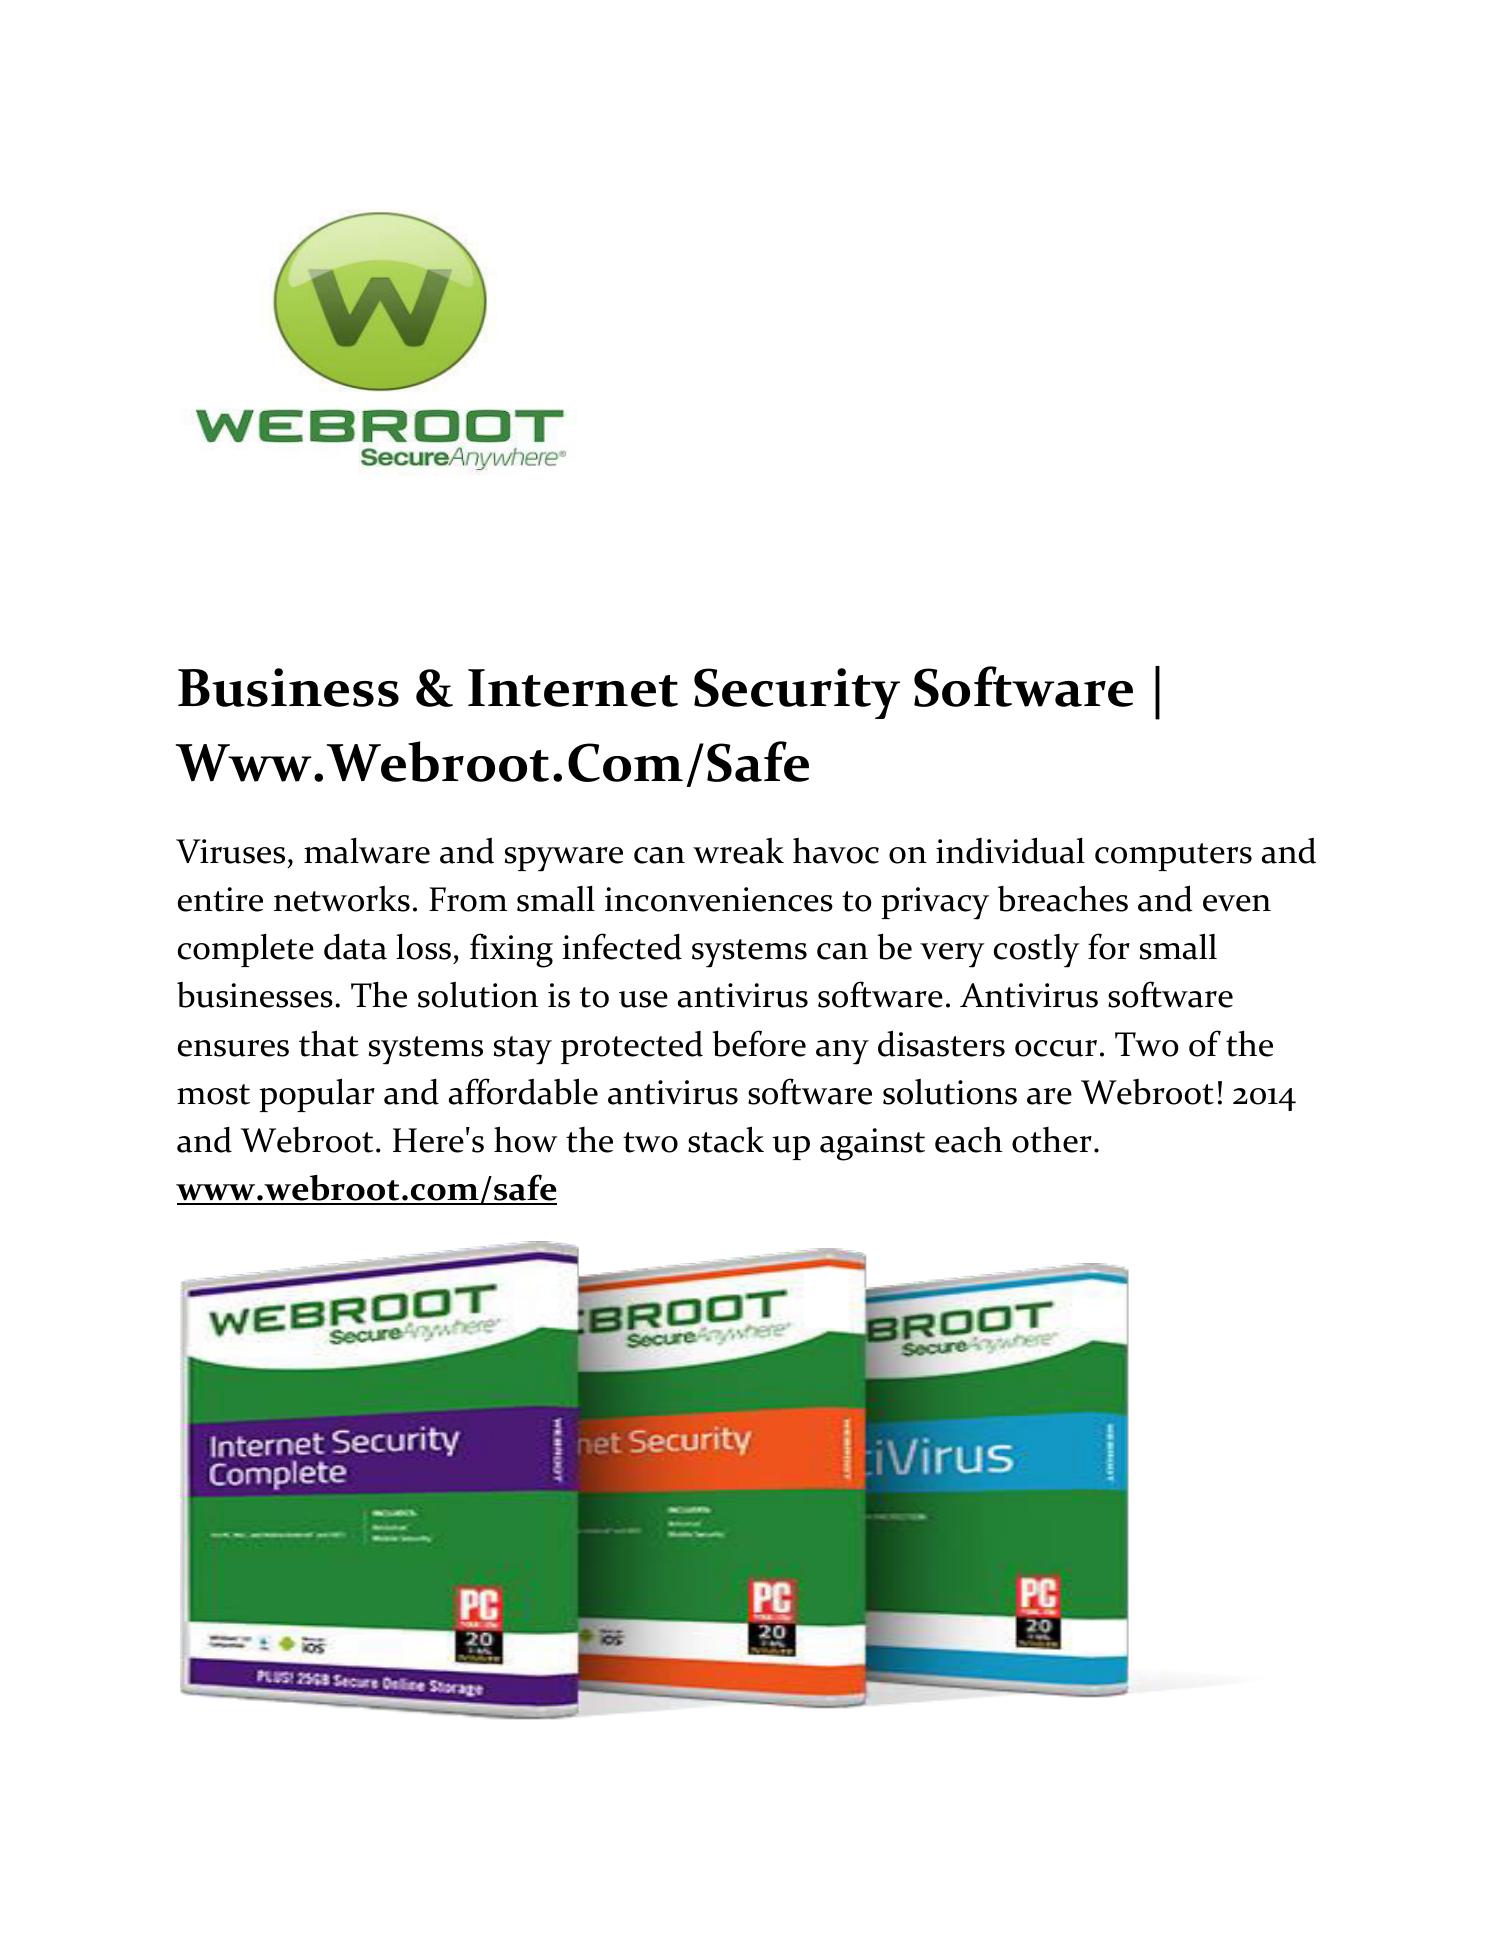 webroot internet security complete antivirus functions